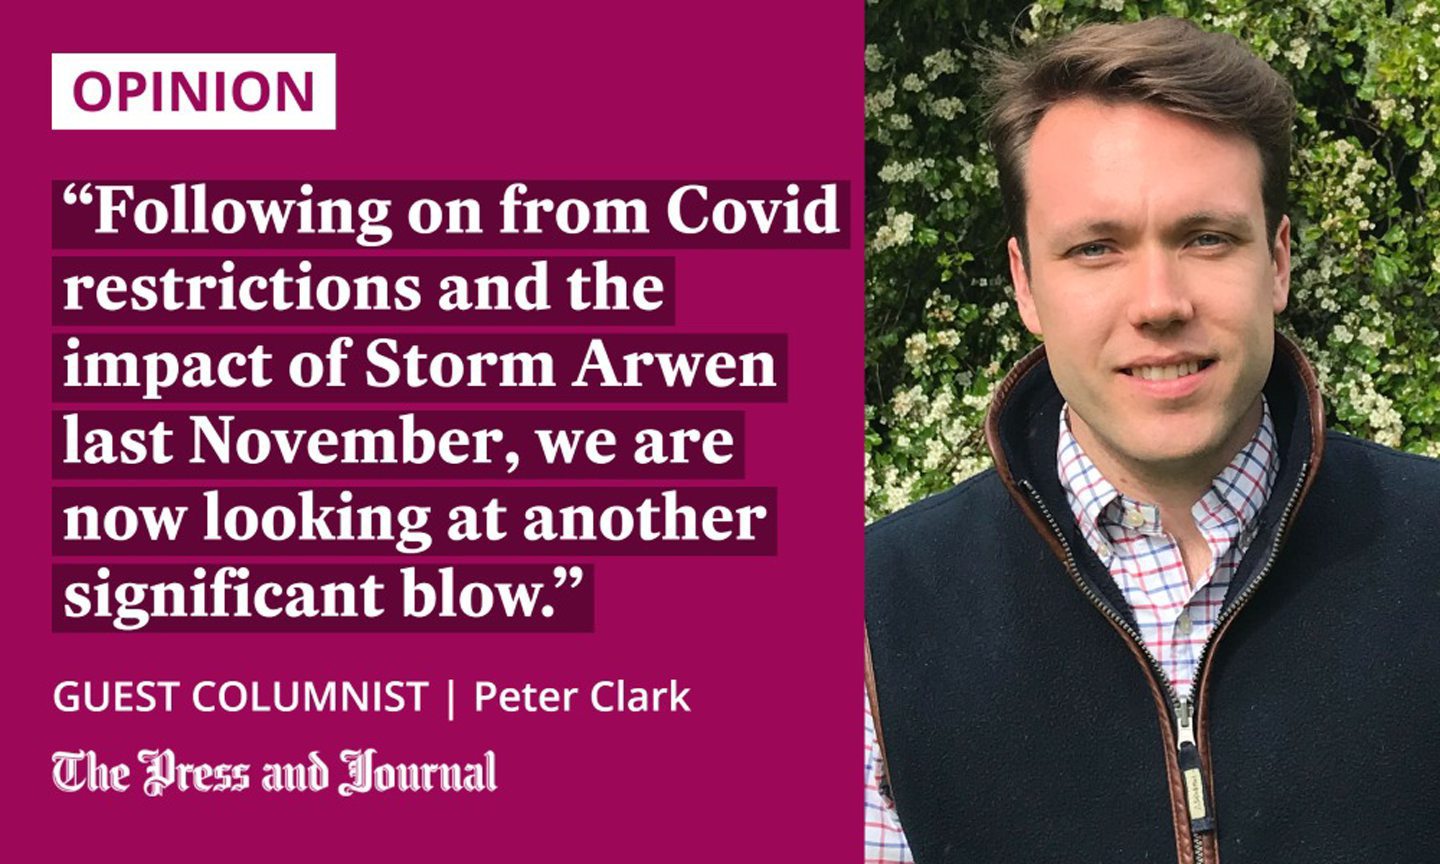 Guest Columnist, Peter Clark on the impact of bird flu